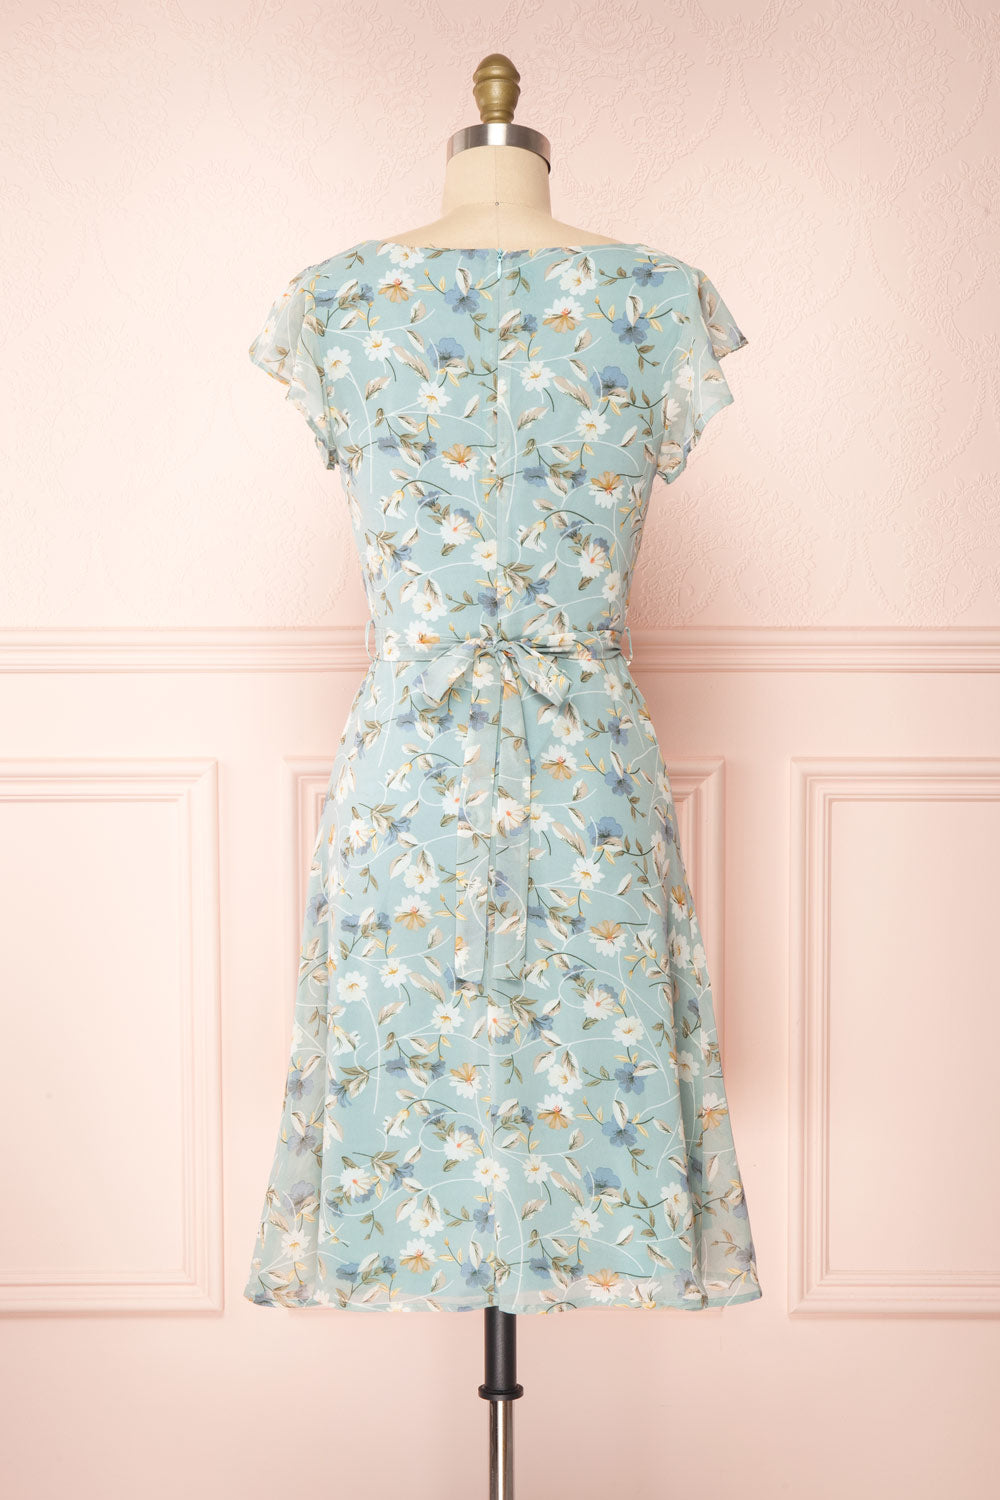 Fuyumi Pastel Blue Floral Short Sleeve Dress | Boutique 1861  back view